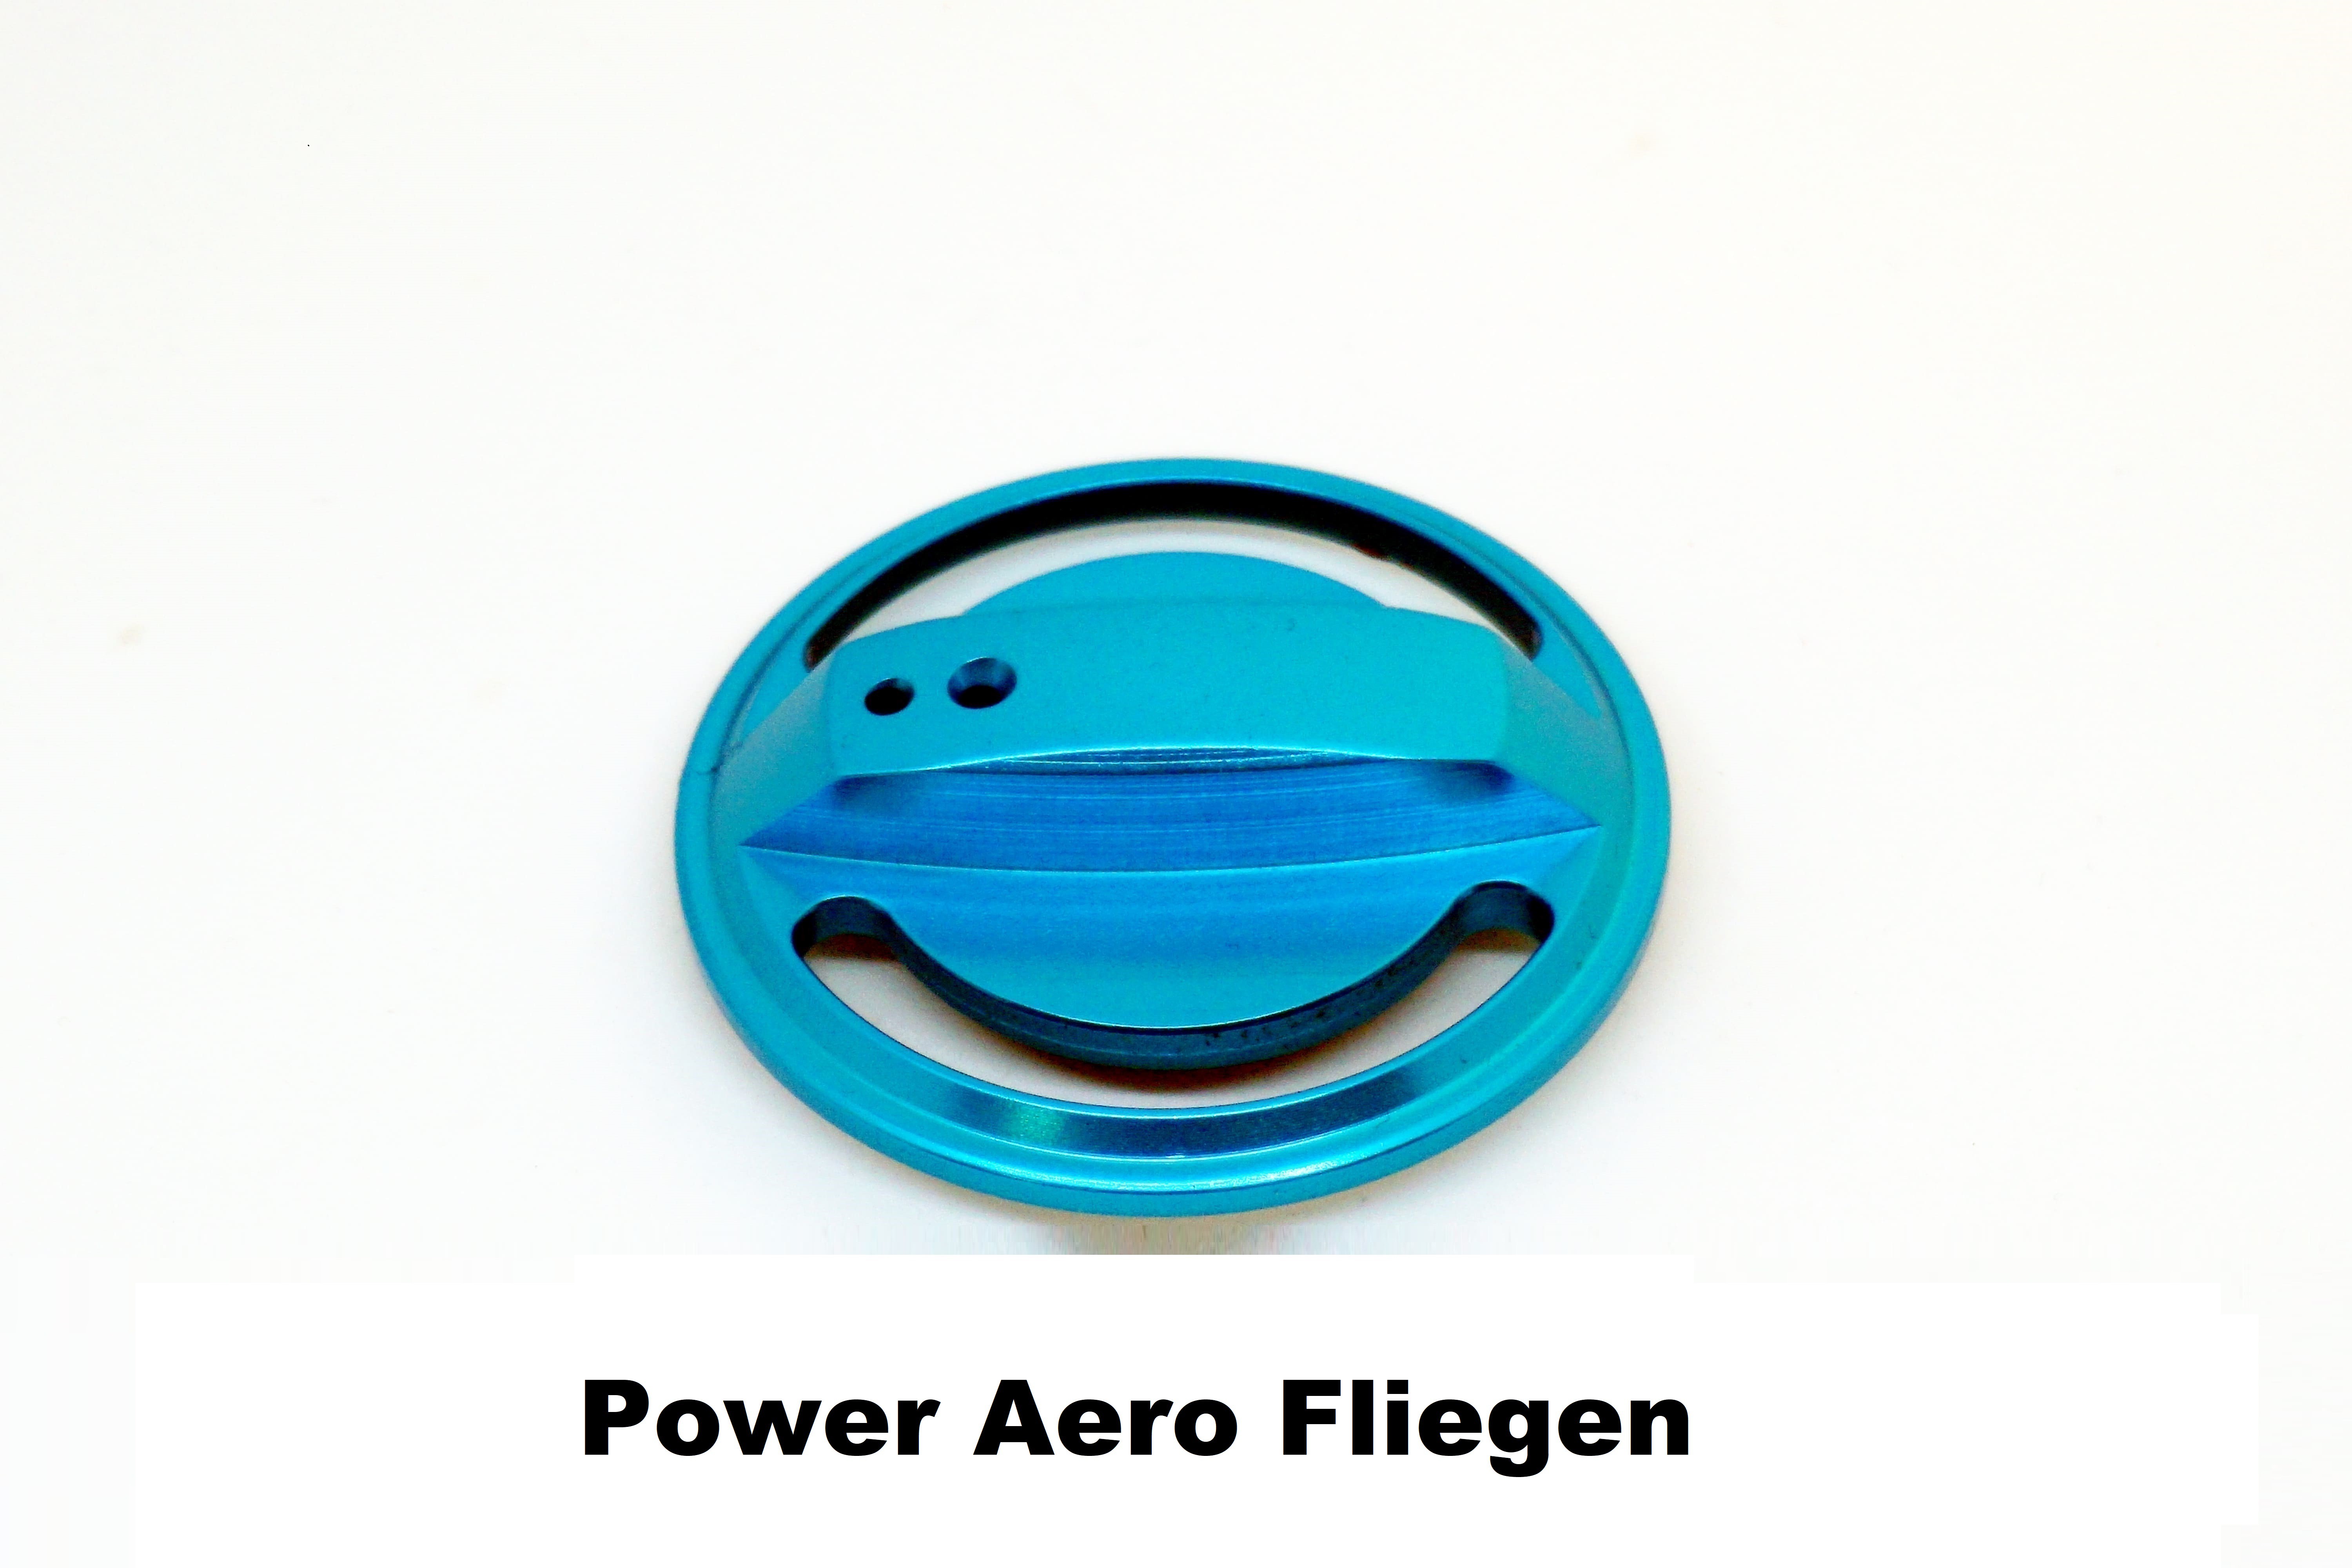 Bouchon de Fren Power Aero Fliegen